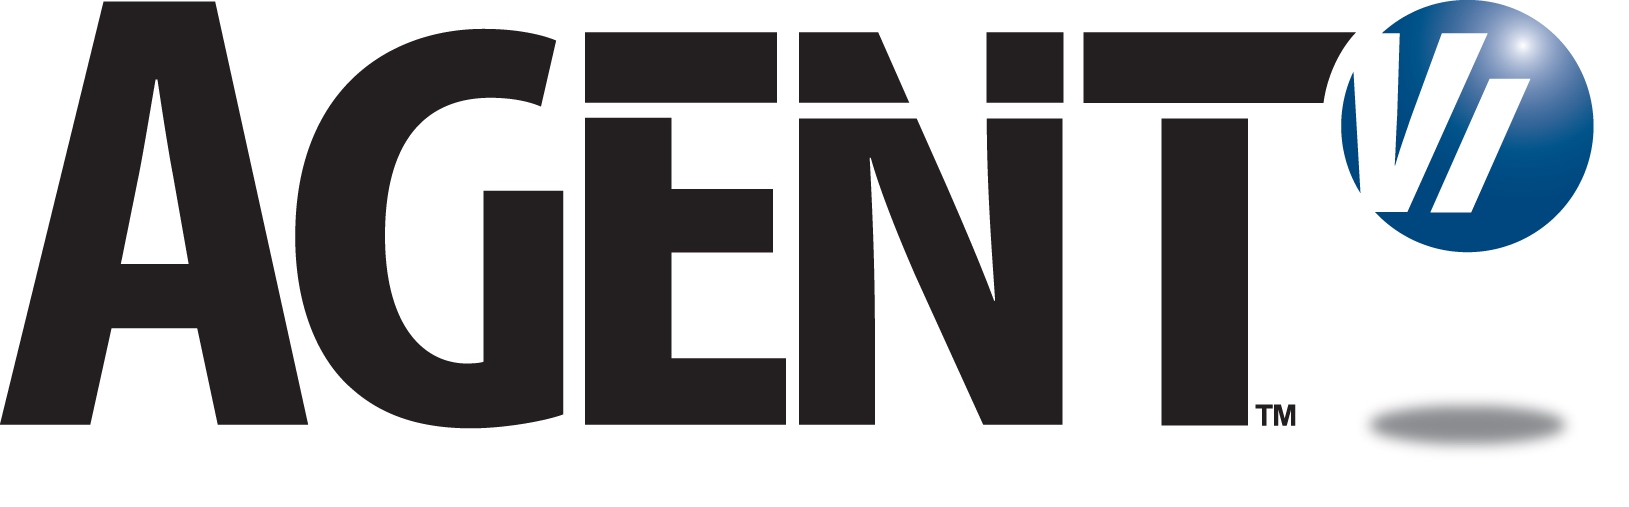 Agentvi Logo photo - 1